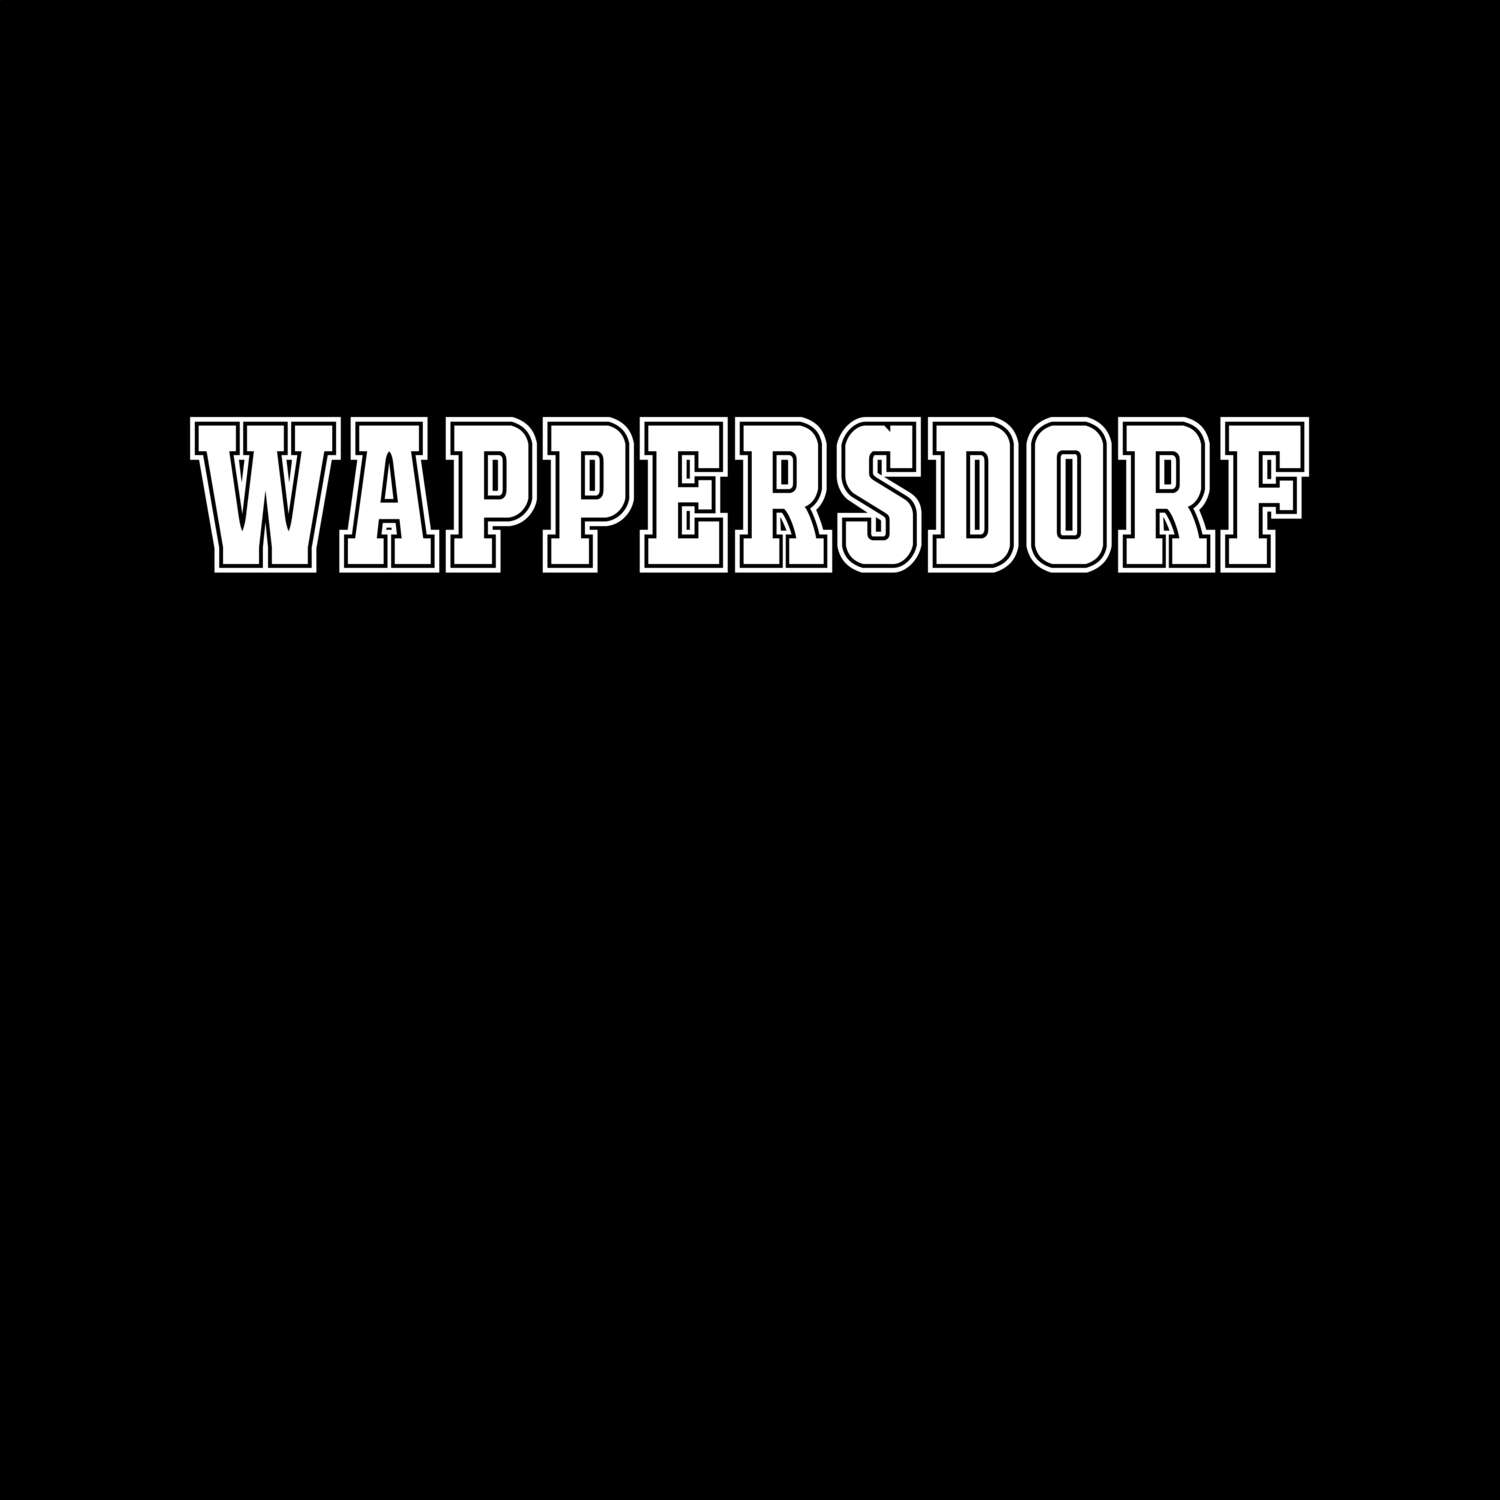 Wappersdorf T-Shirt »Classic«